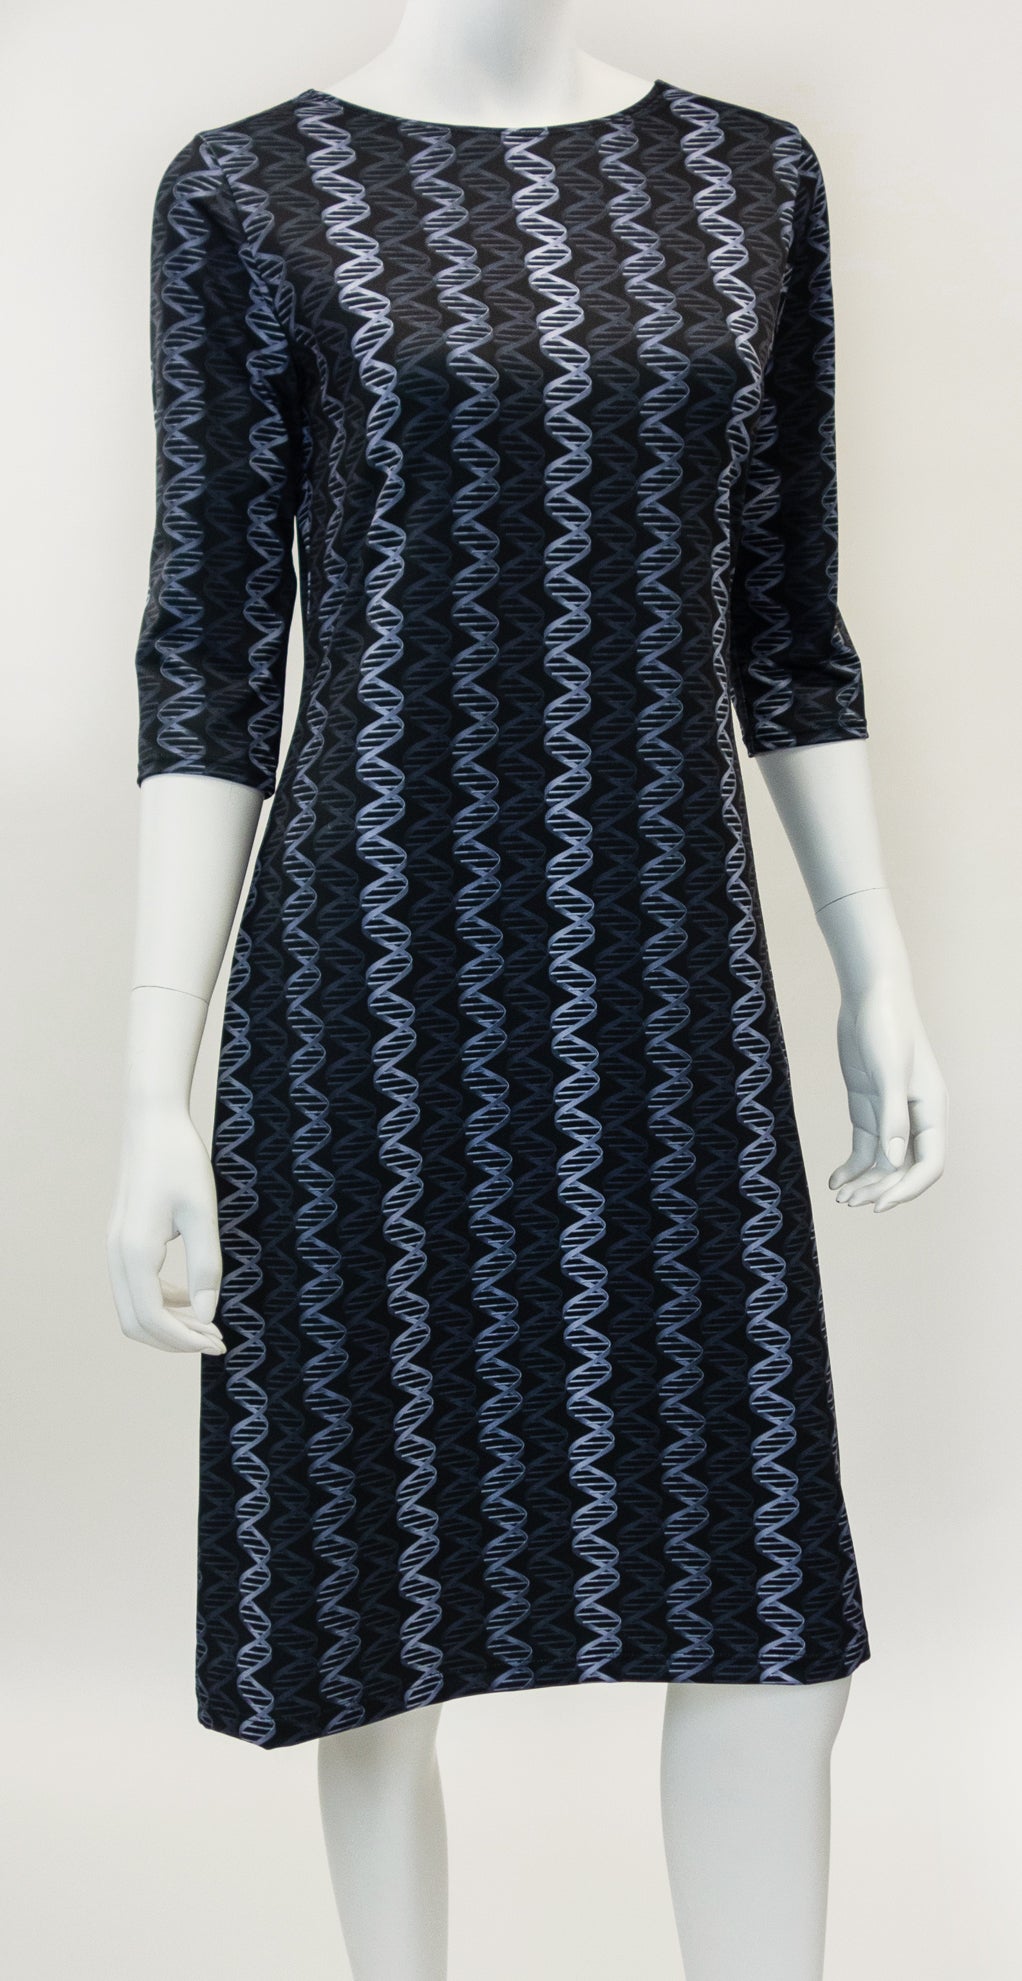 DNA Double Helix Dress - Shenova Fashion